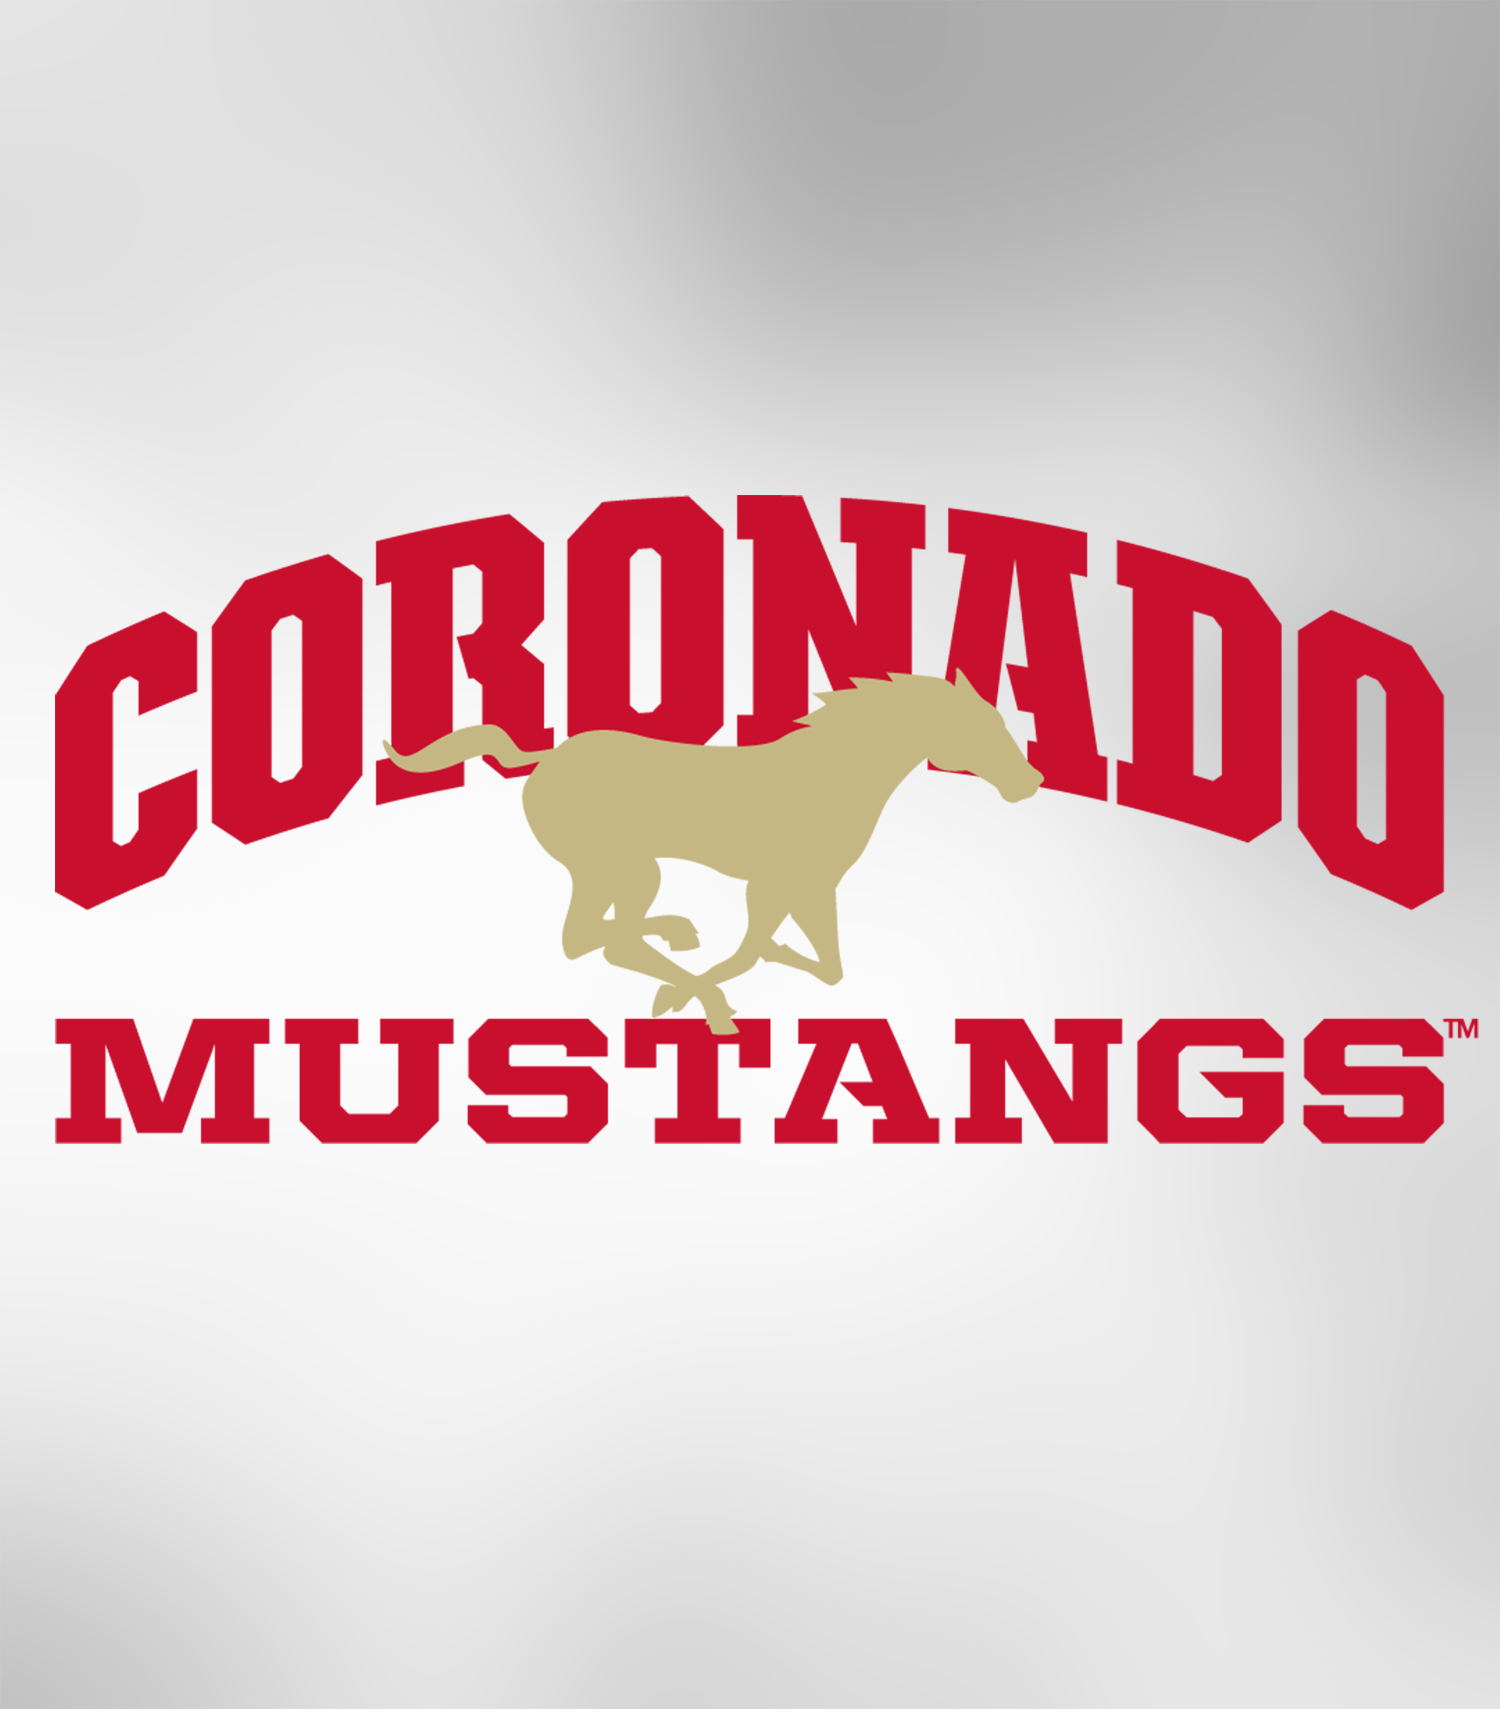 Coronado Mustangs